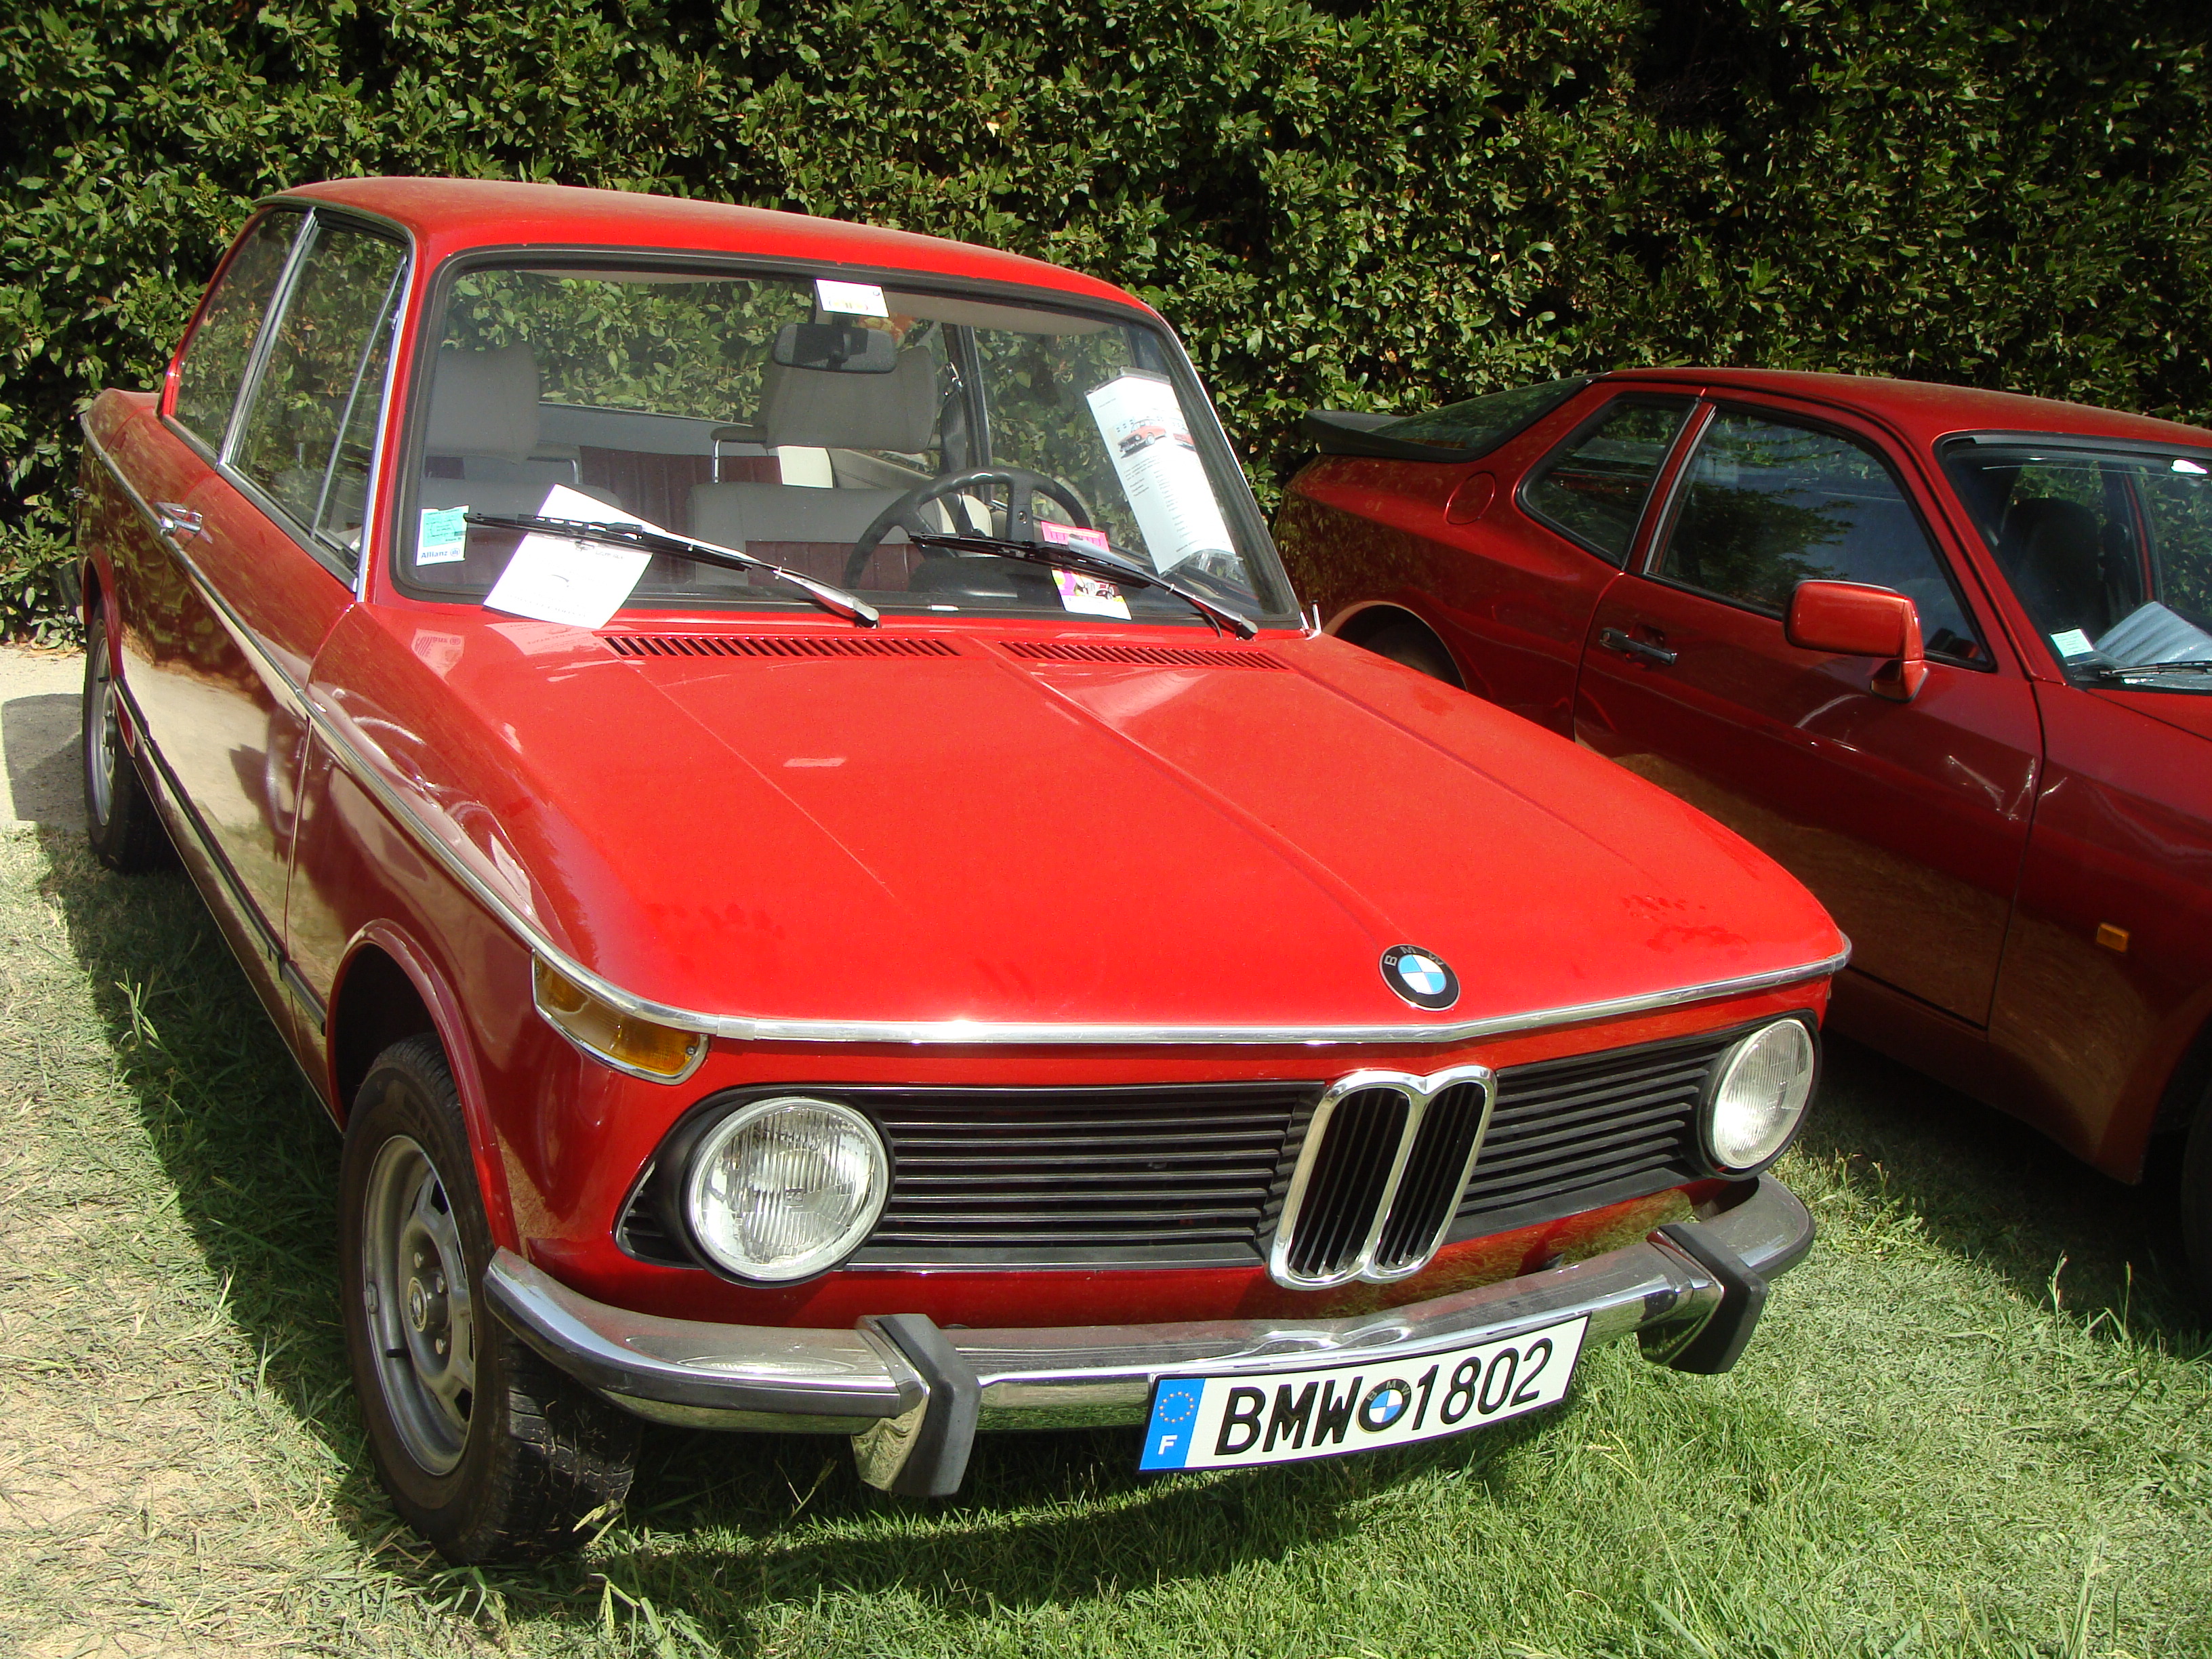 BMW 1802 | Flickr - Photo Sharing!